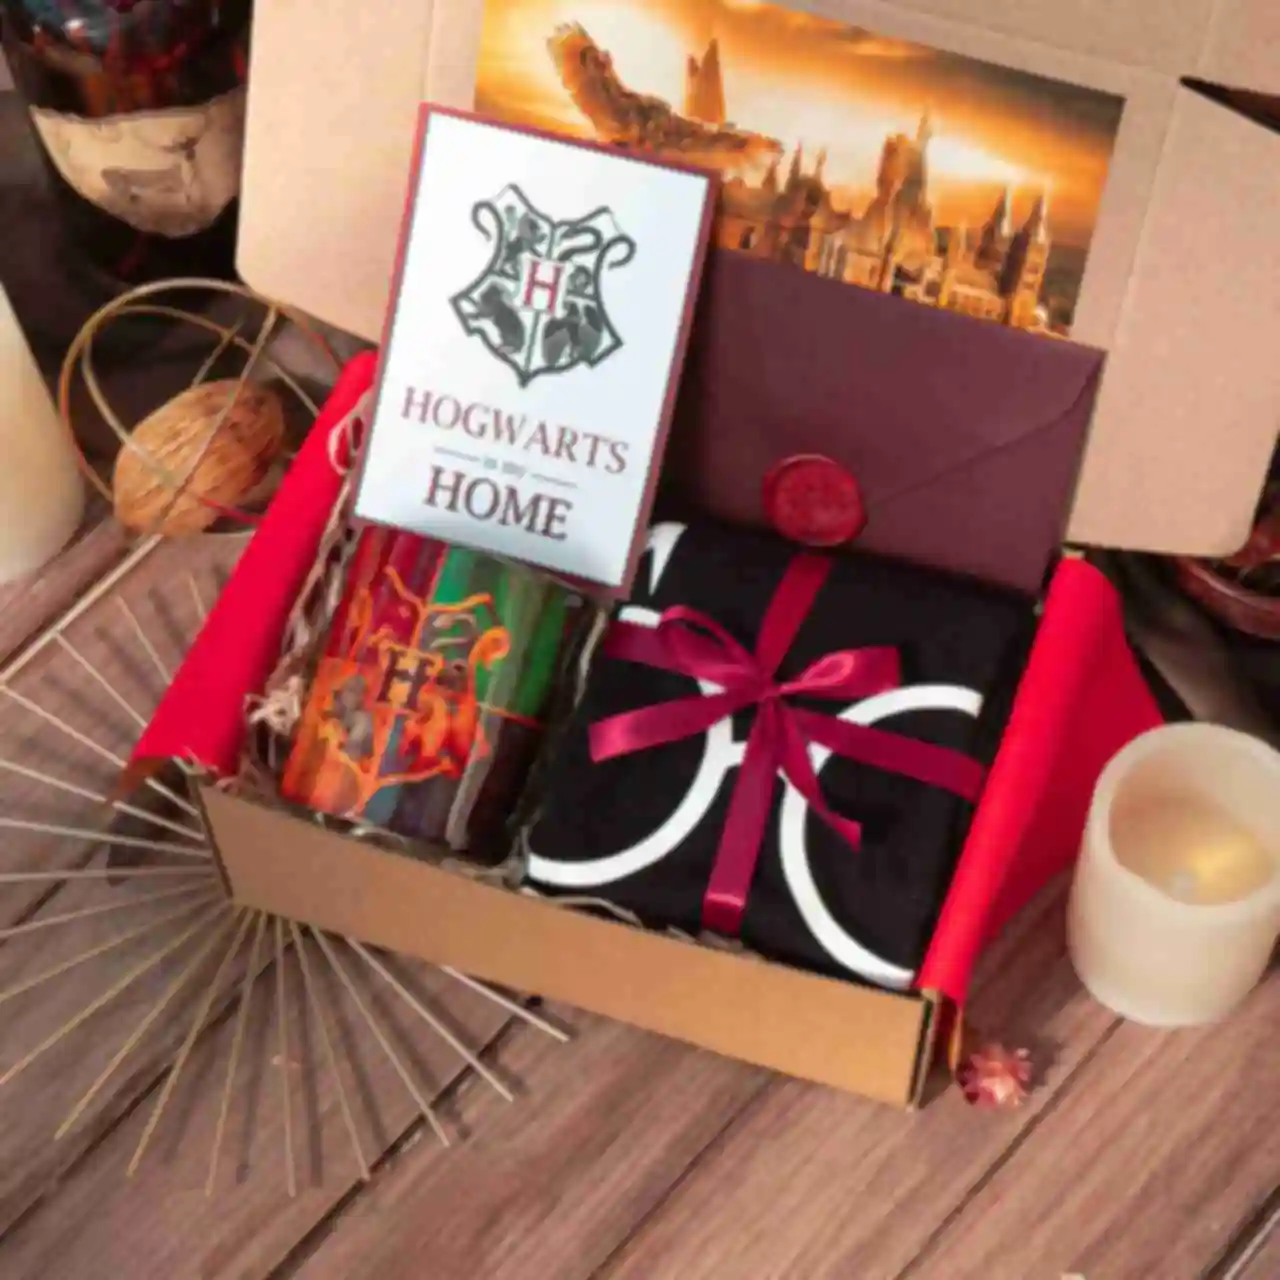 Набір Гоґвортс ⦁ medium ⚡️ Подарунок Гаррі Поттер ⚡️ Hogwarts ⚡️ Harry Potter